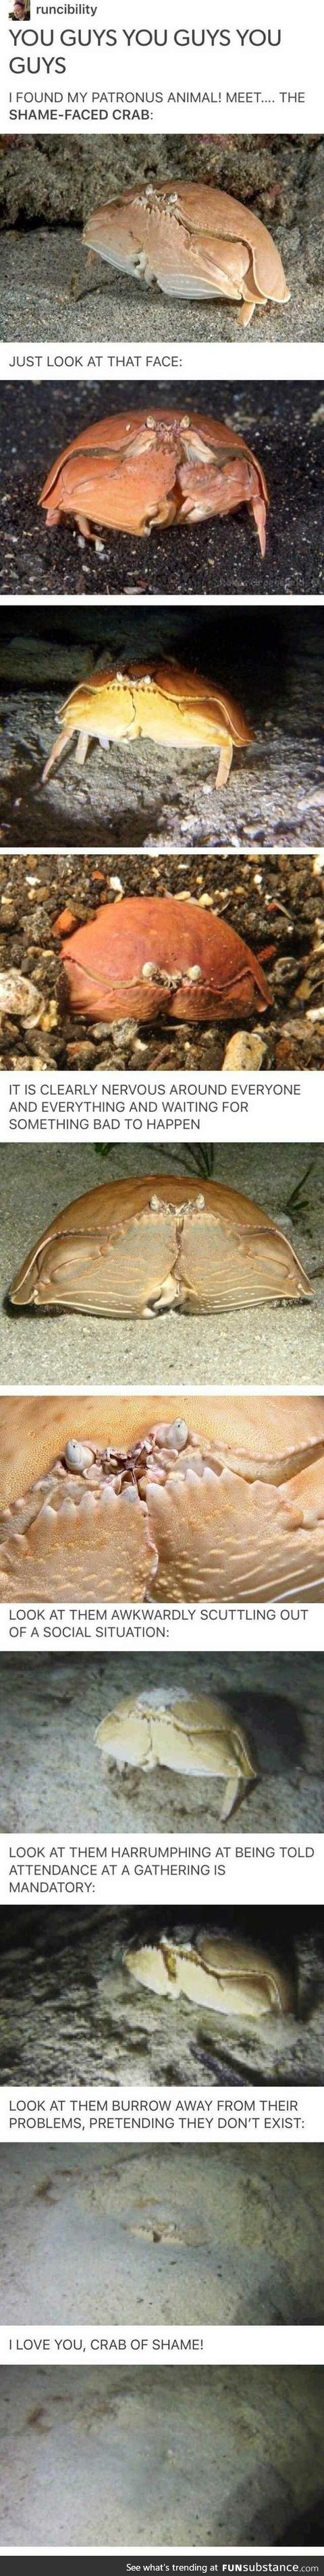 Meet this crab